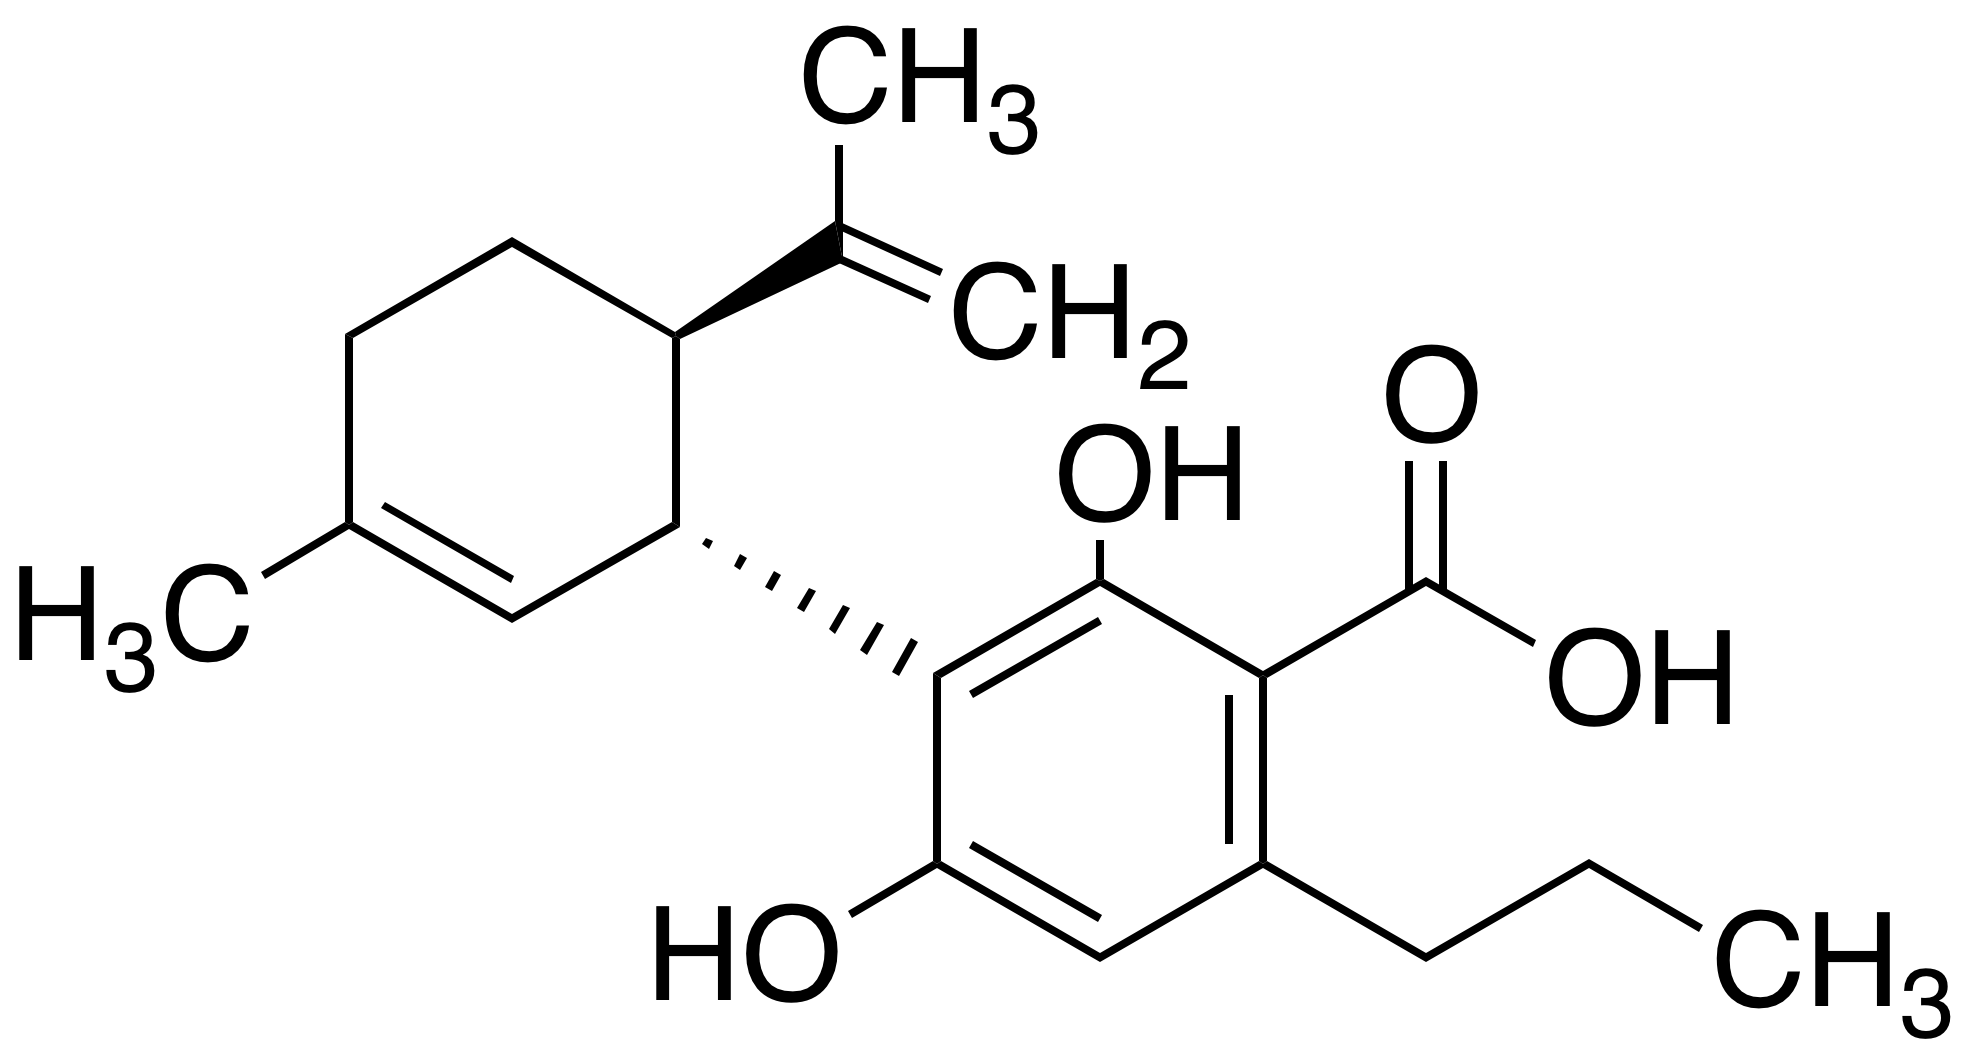 Cannabidivarinic Acid (1.0 mg/mL in Acetonitrile)